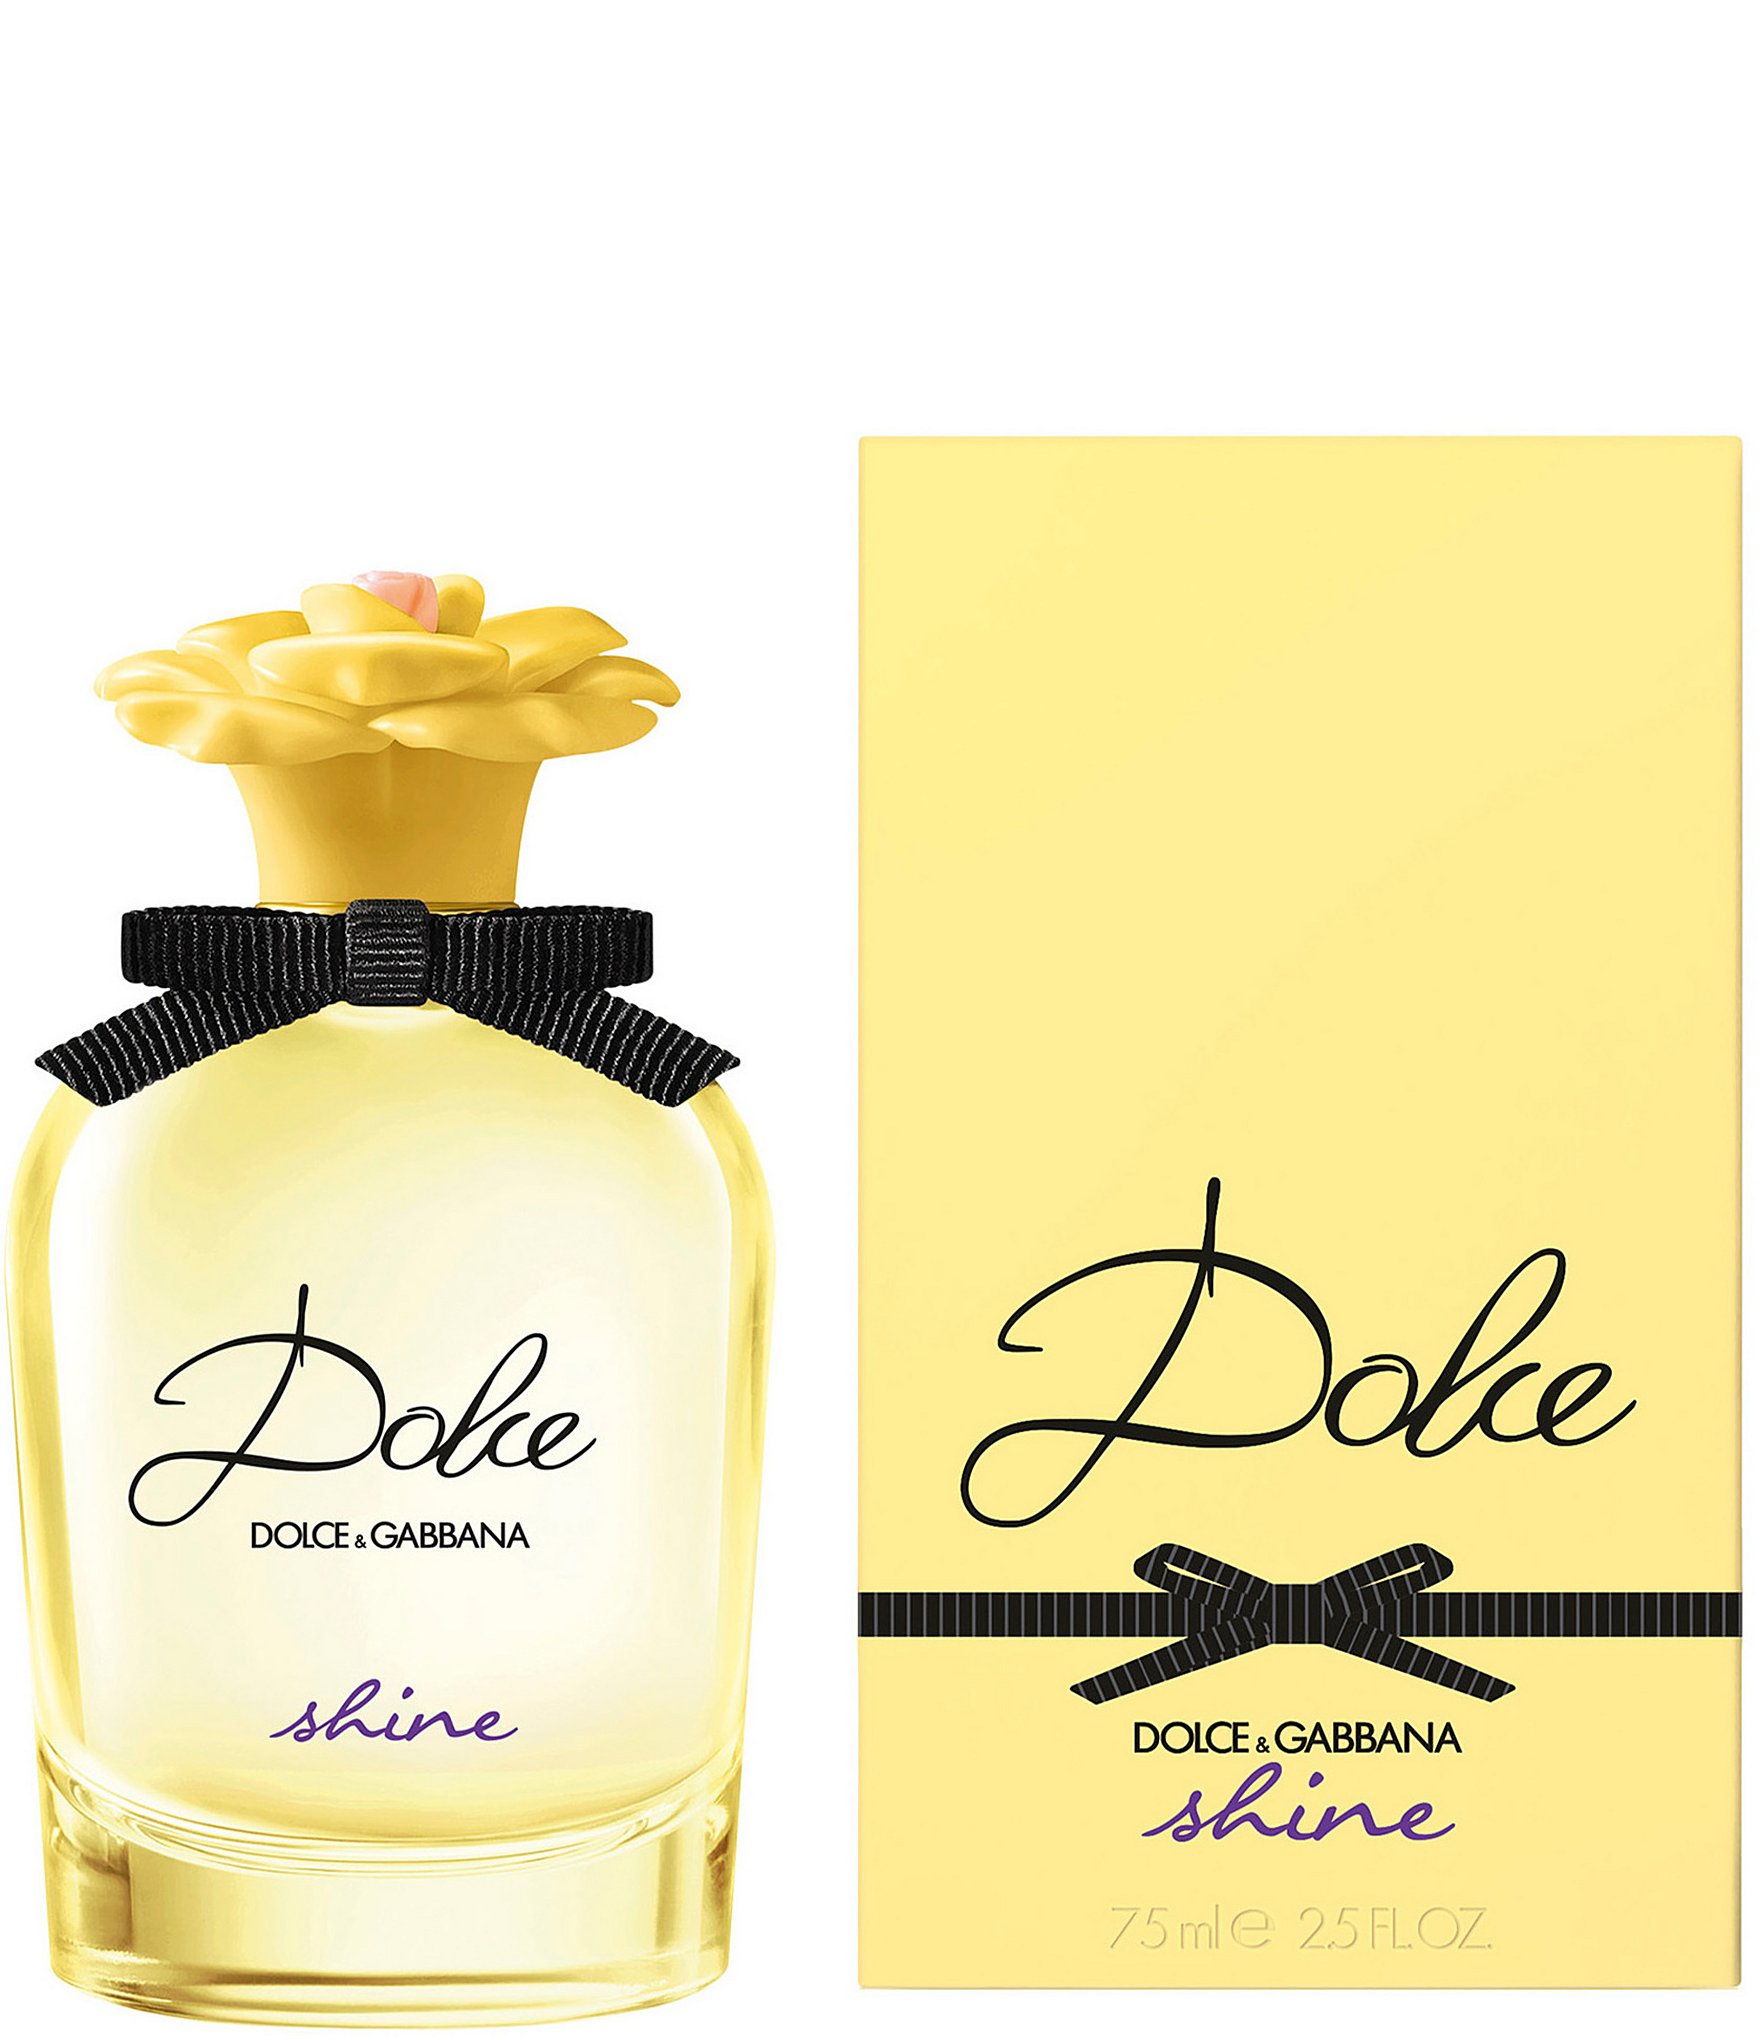 Dolce & Shine Eau de Dillard's